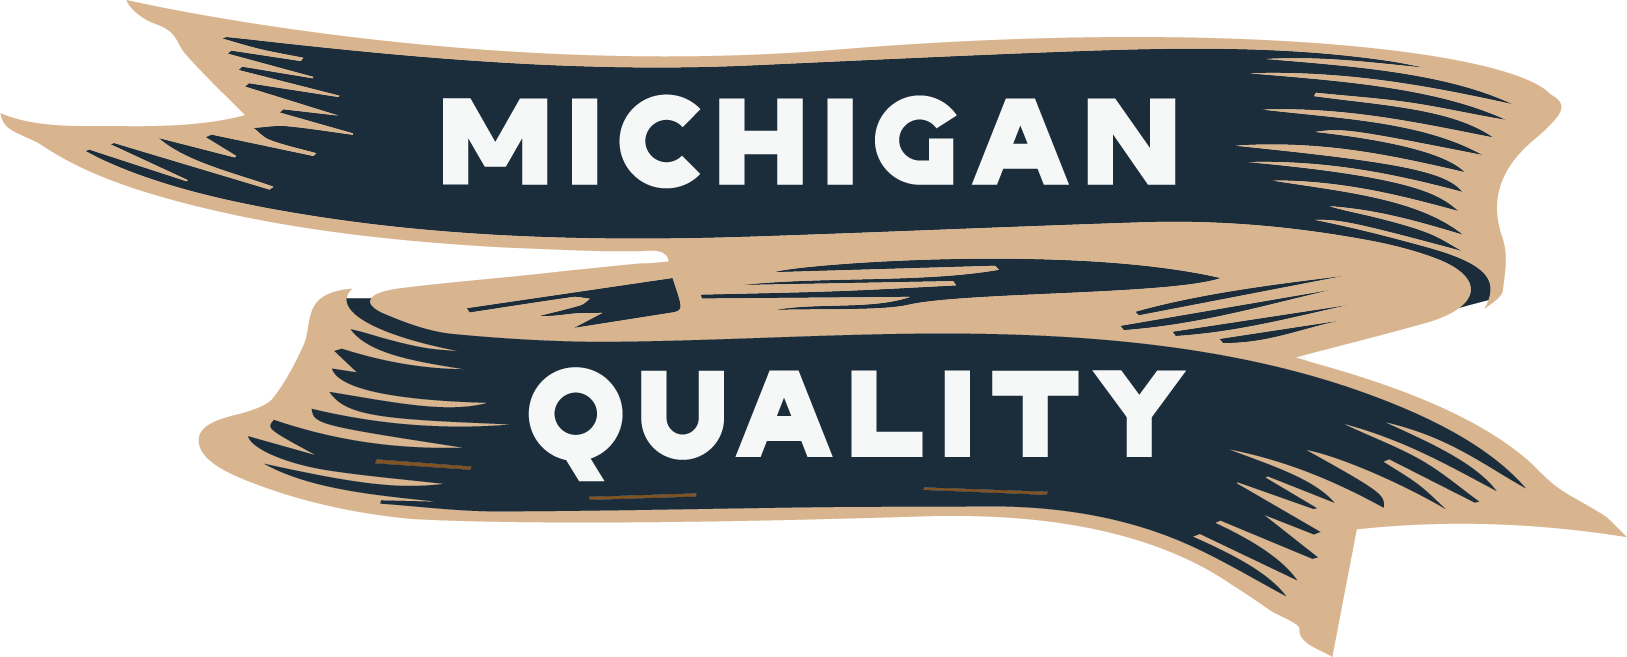 Lake State Banner stating Michigan Quality